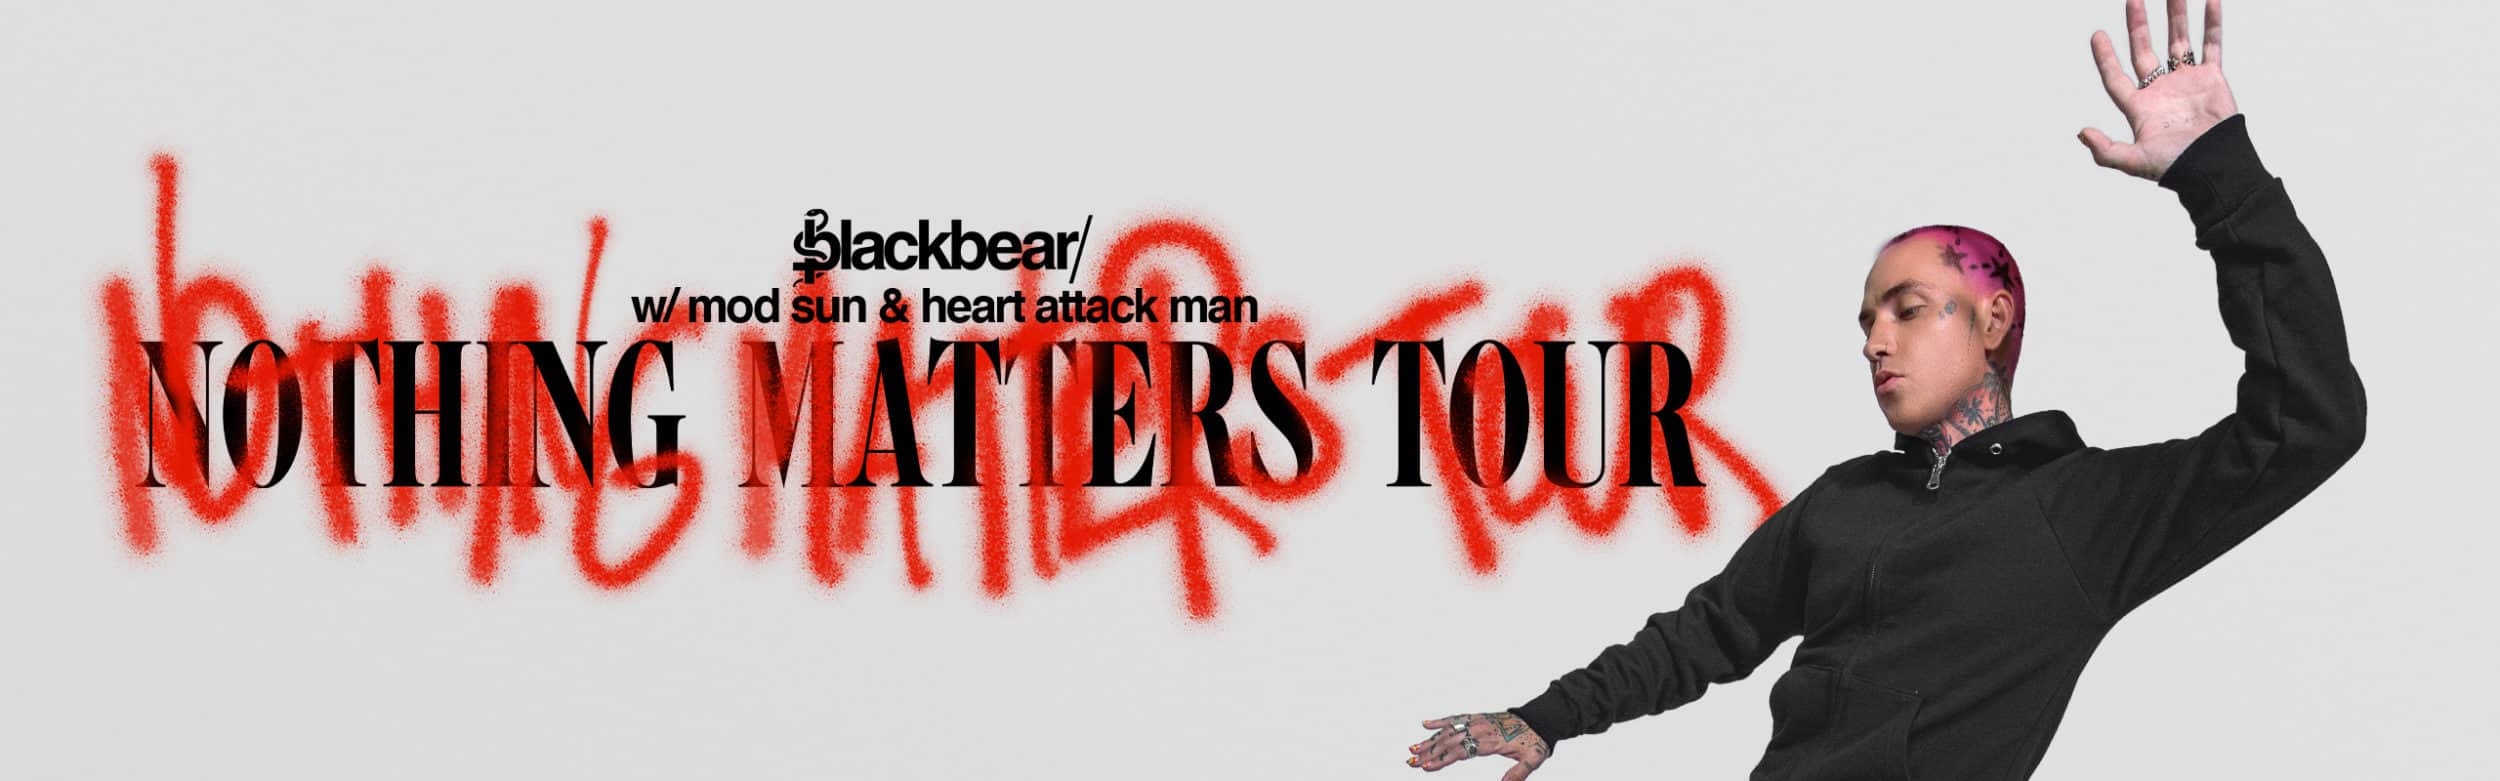 blackbear: nothing matters tour